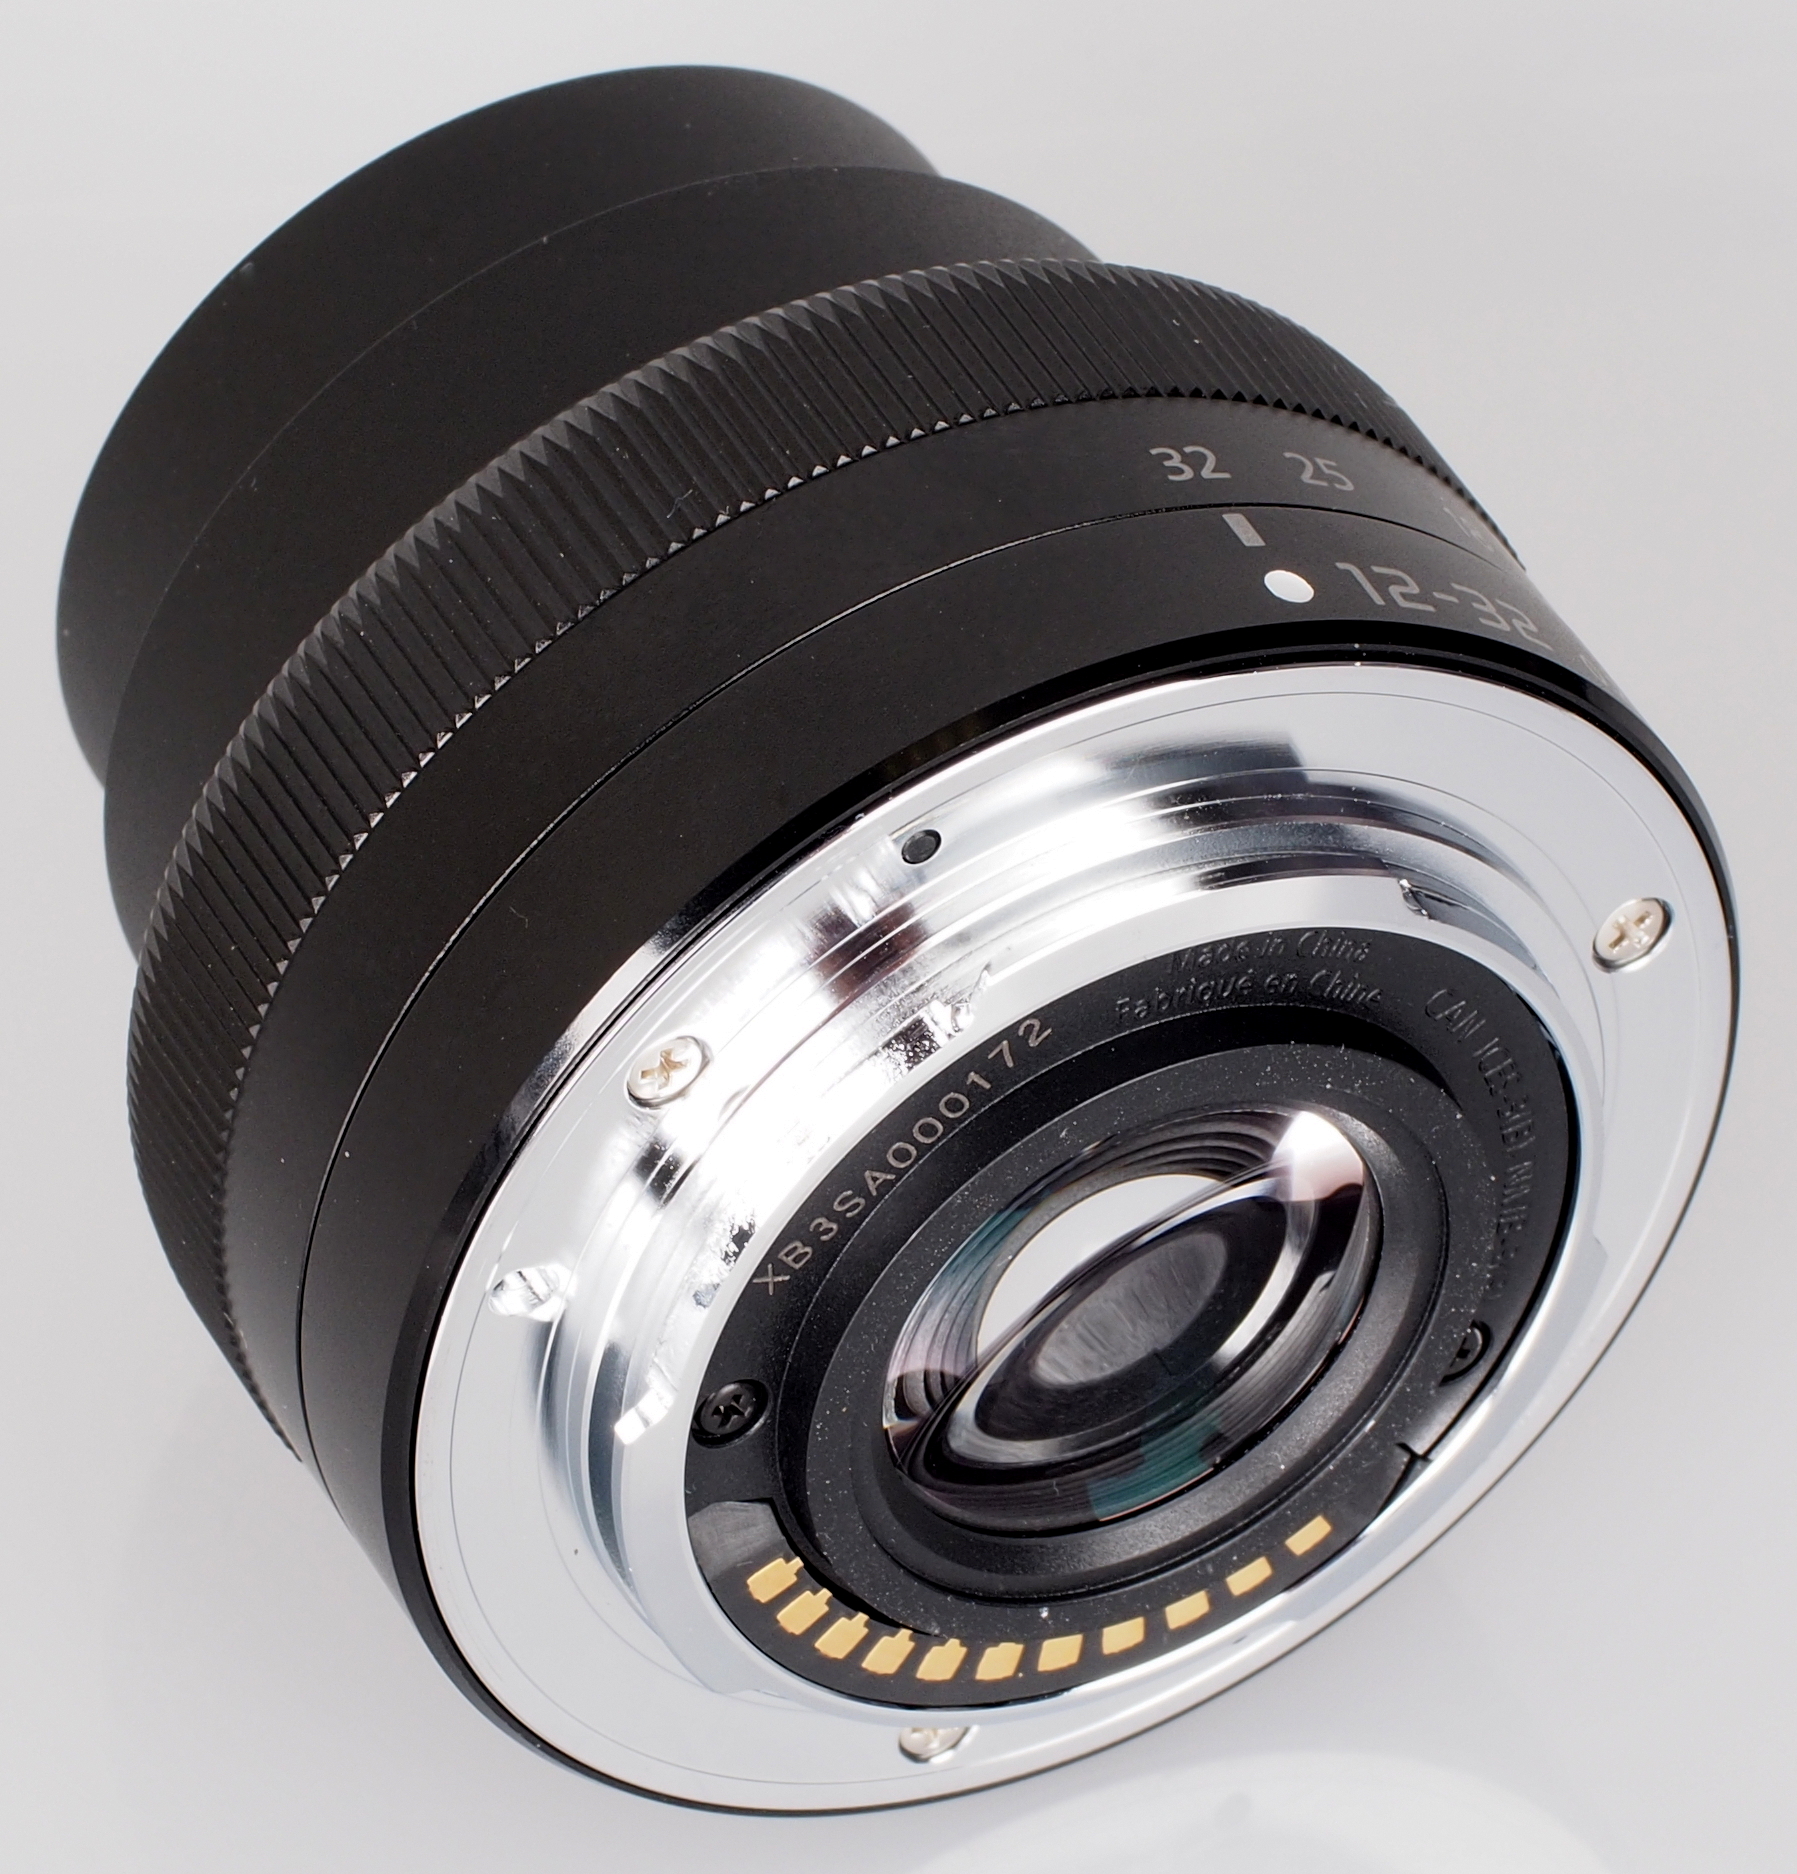 Panasonic Lumix G Vario 12-32mm f/3.5-5.6 ASPH. Lens Review